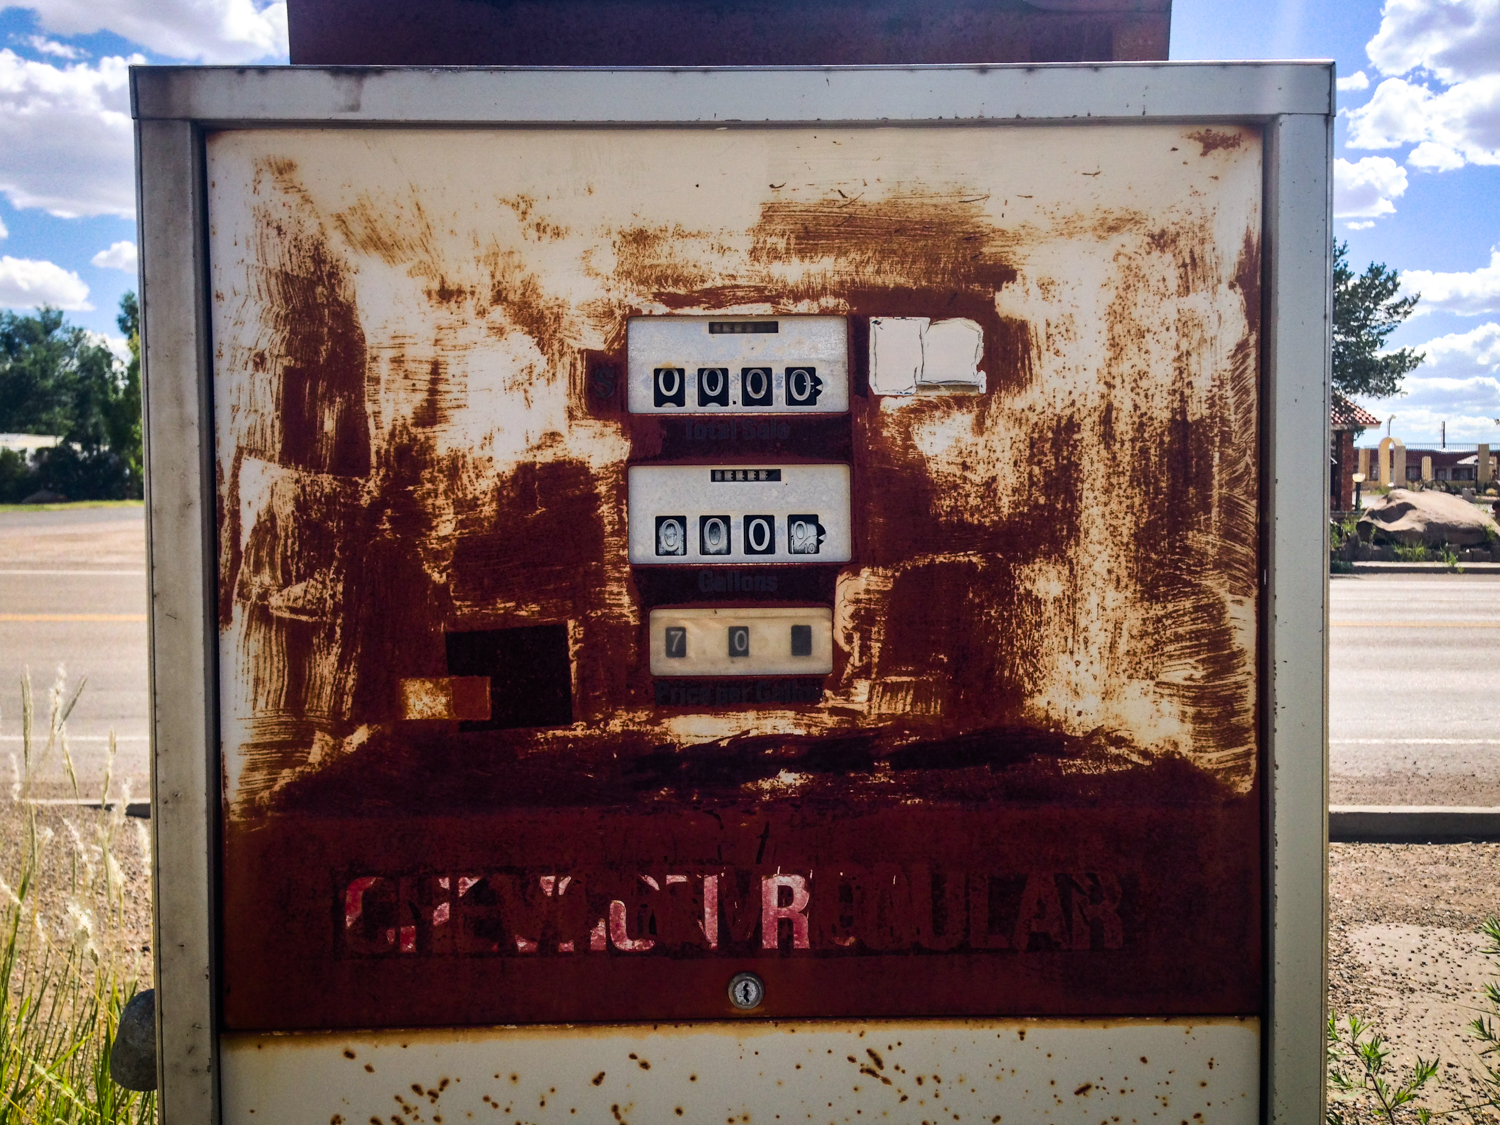 Old gas pump, Vaughn NM